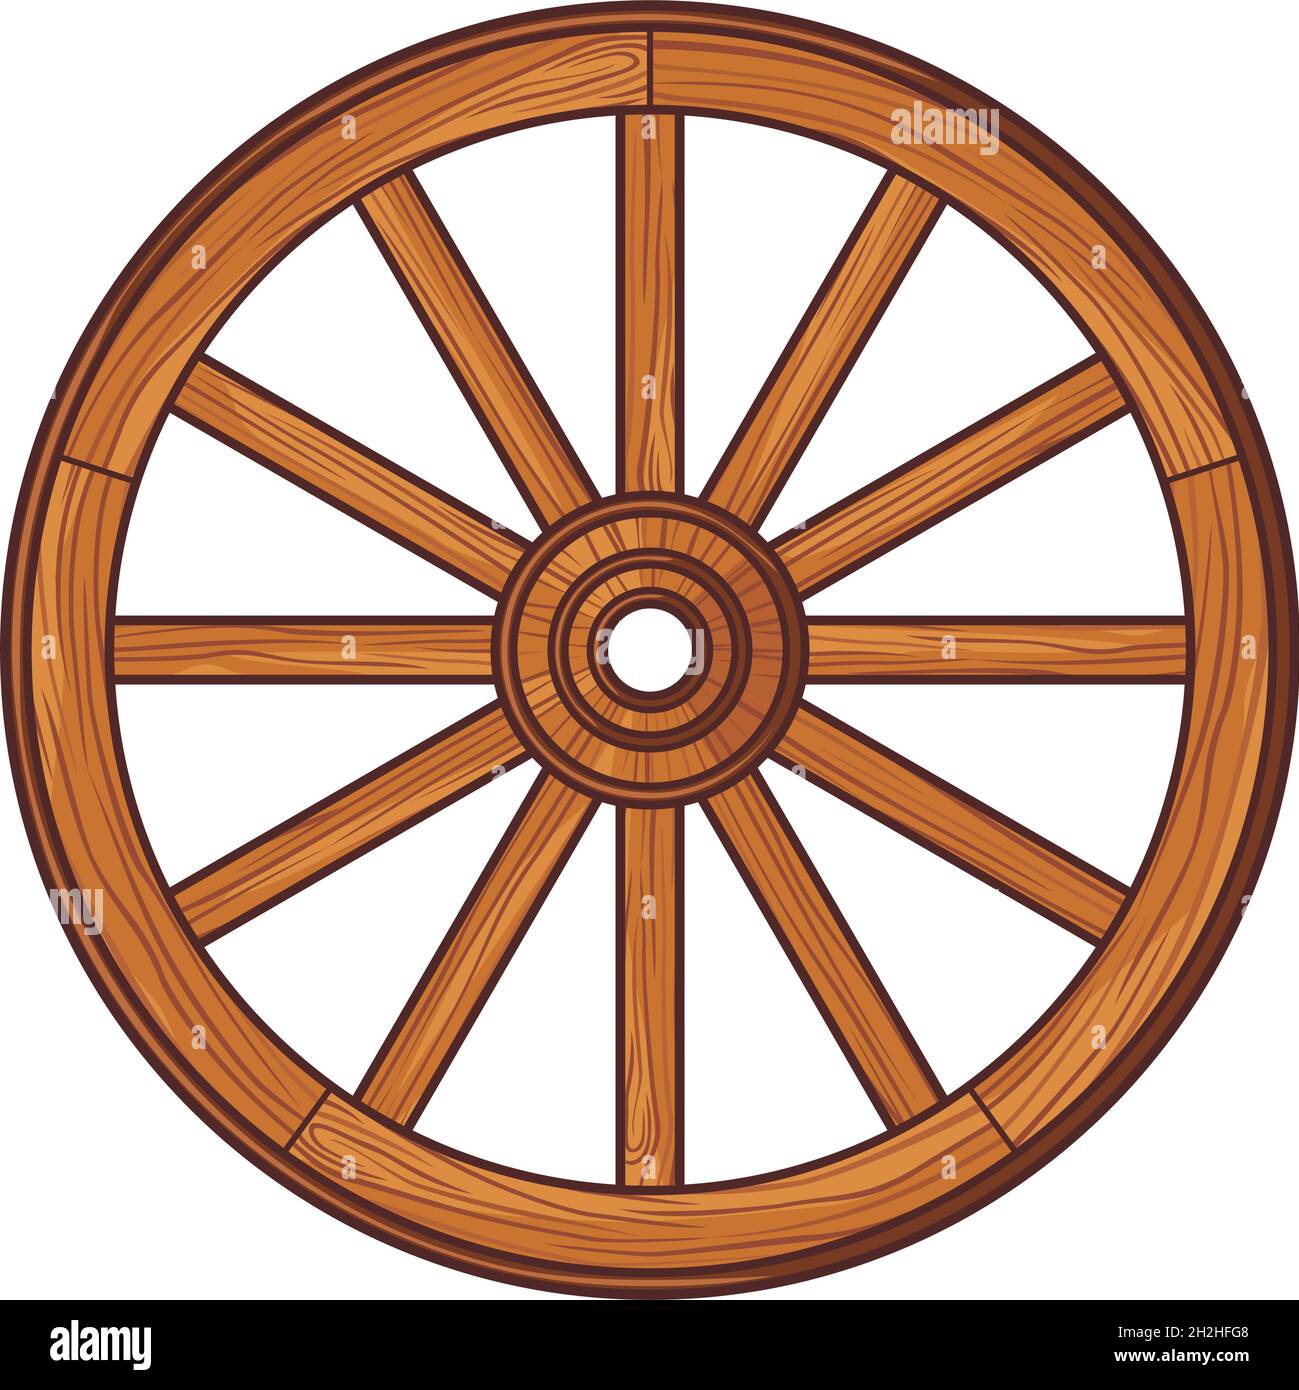 Old wooden wheel vector illustration Stock Vector